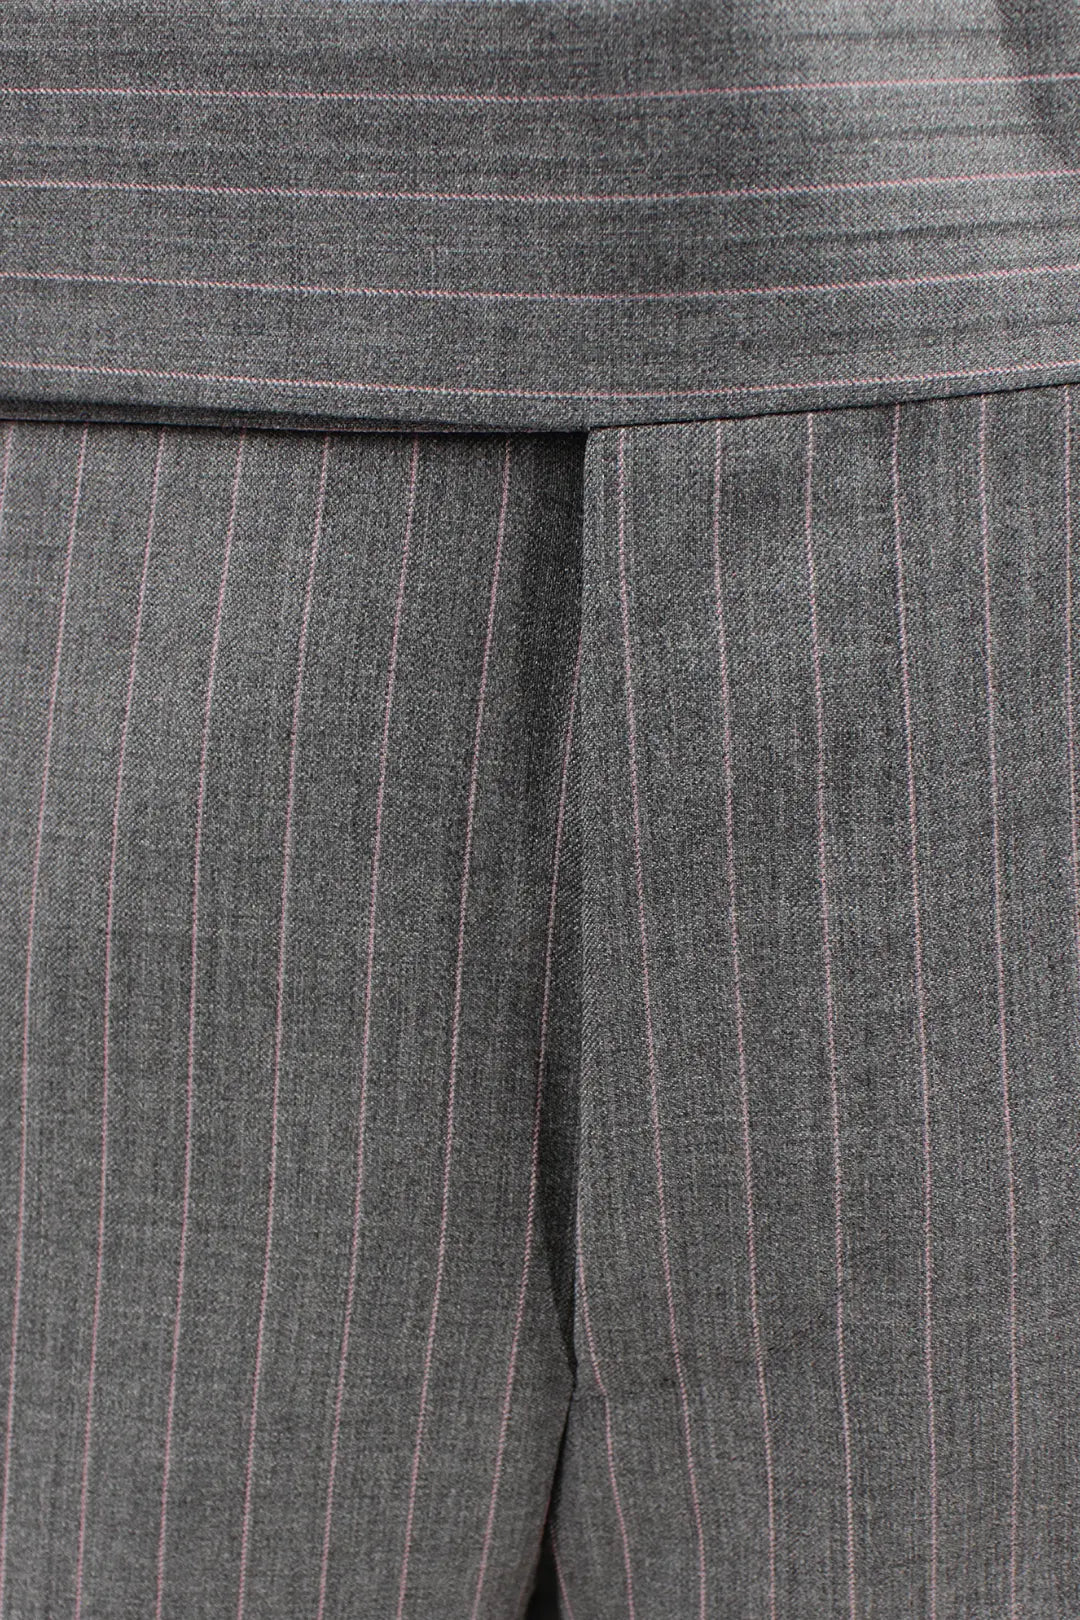 Pantalone cinta sartoriale lana grigia gessata tessuto